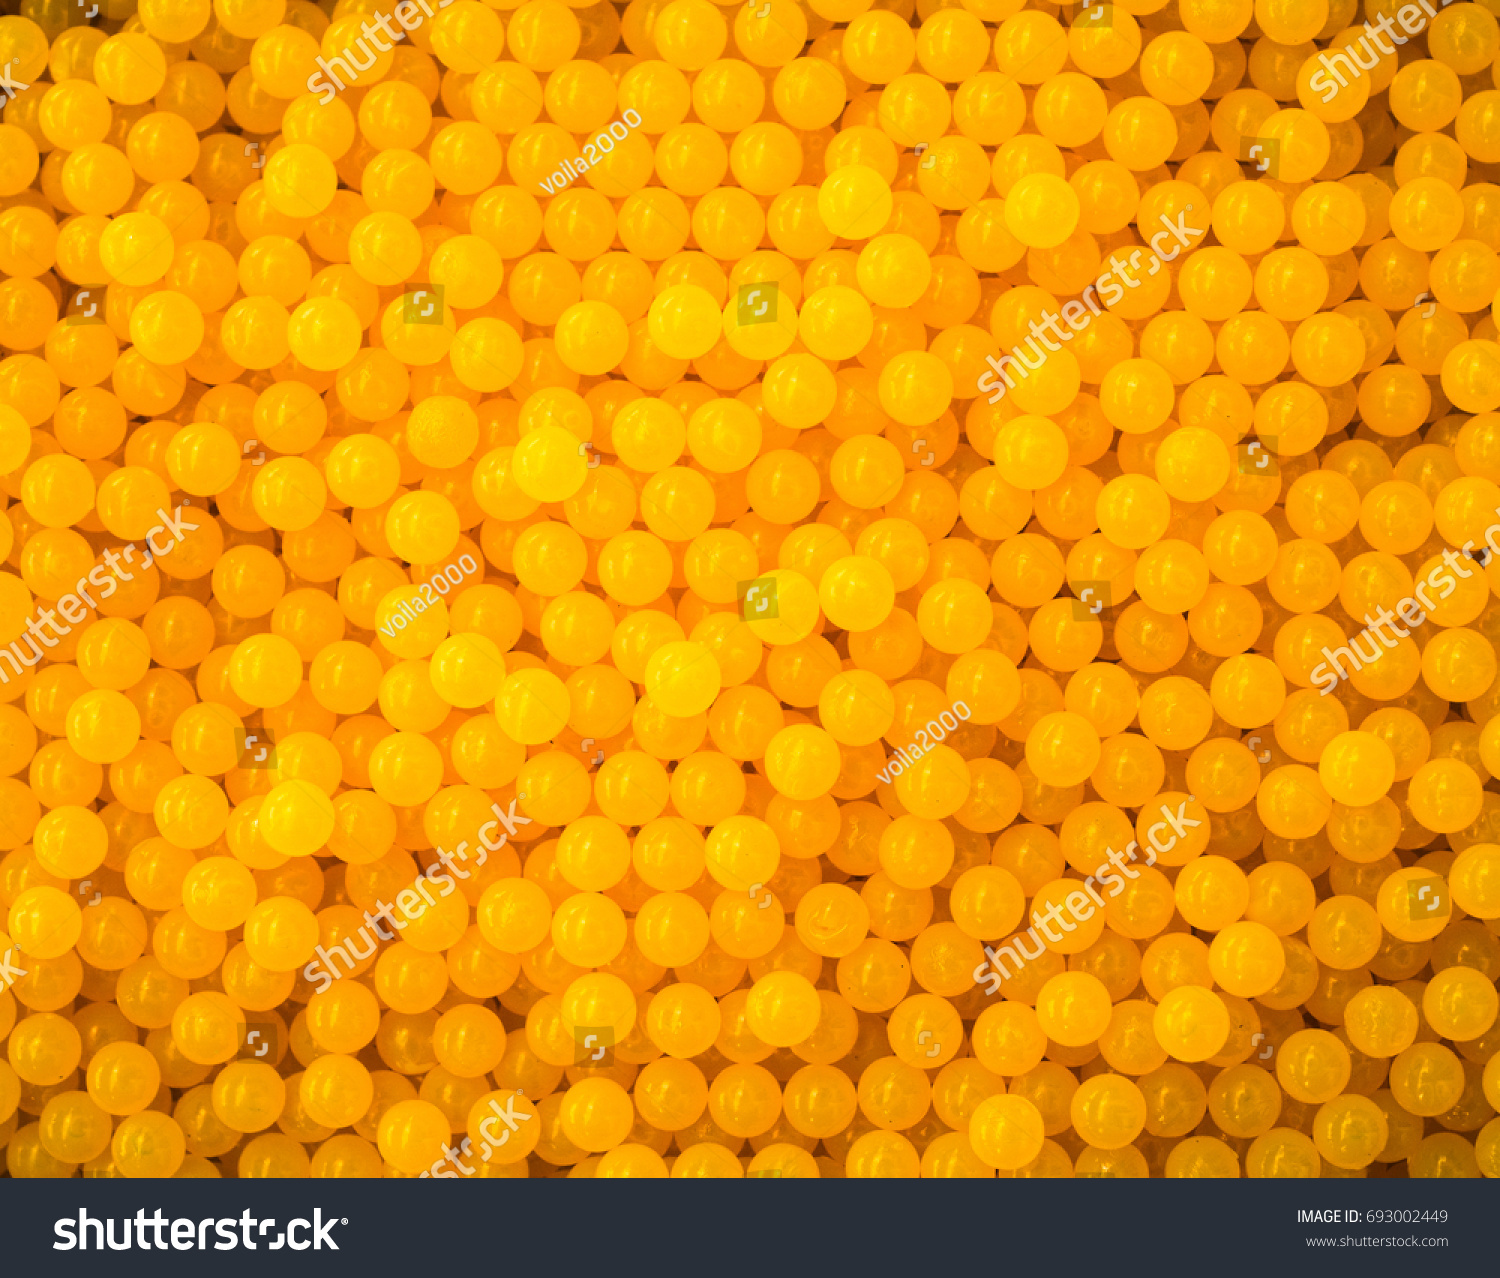 yellow balls texture #693002449